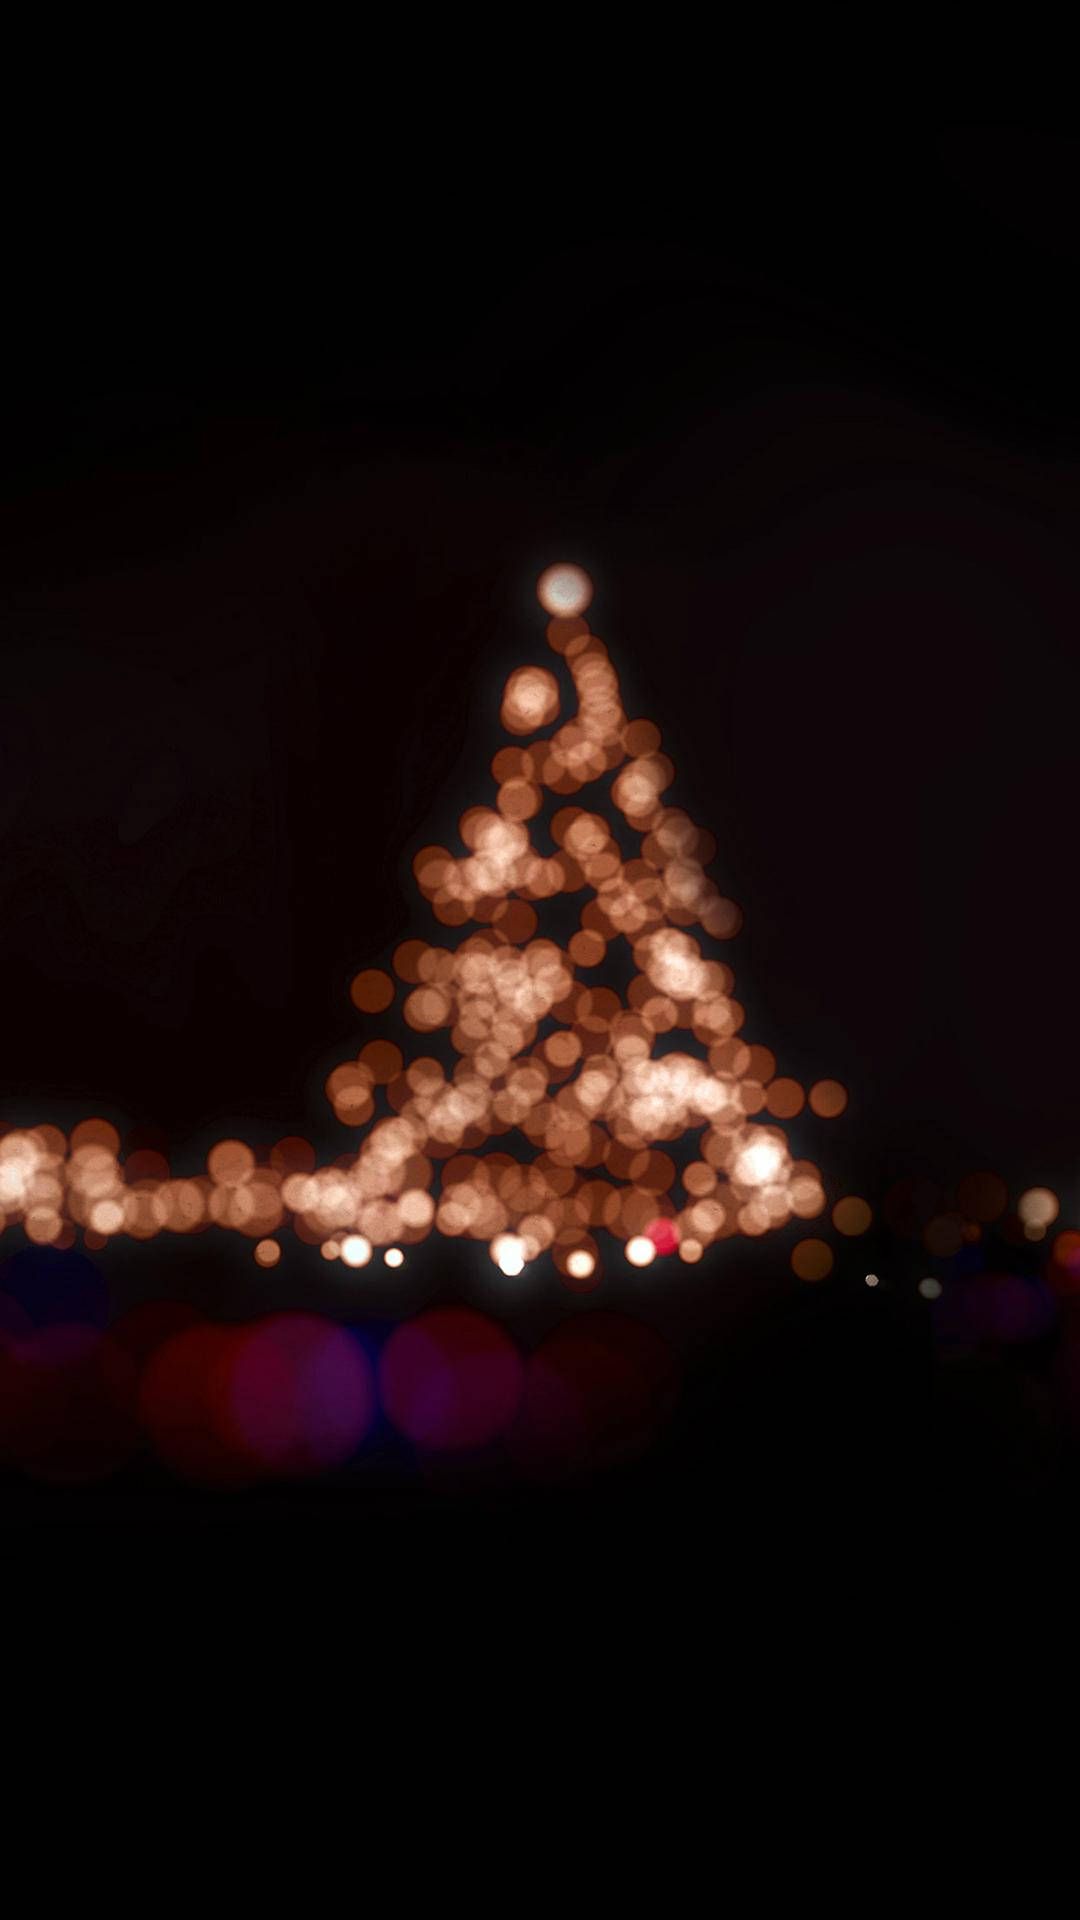 A christmas tree with lights on it - Christmas iPhone, Christmas lights, Christmas